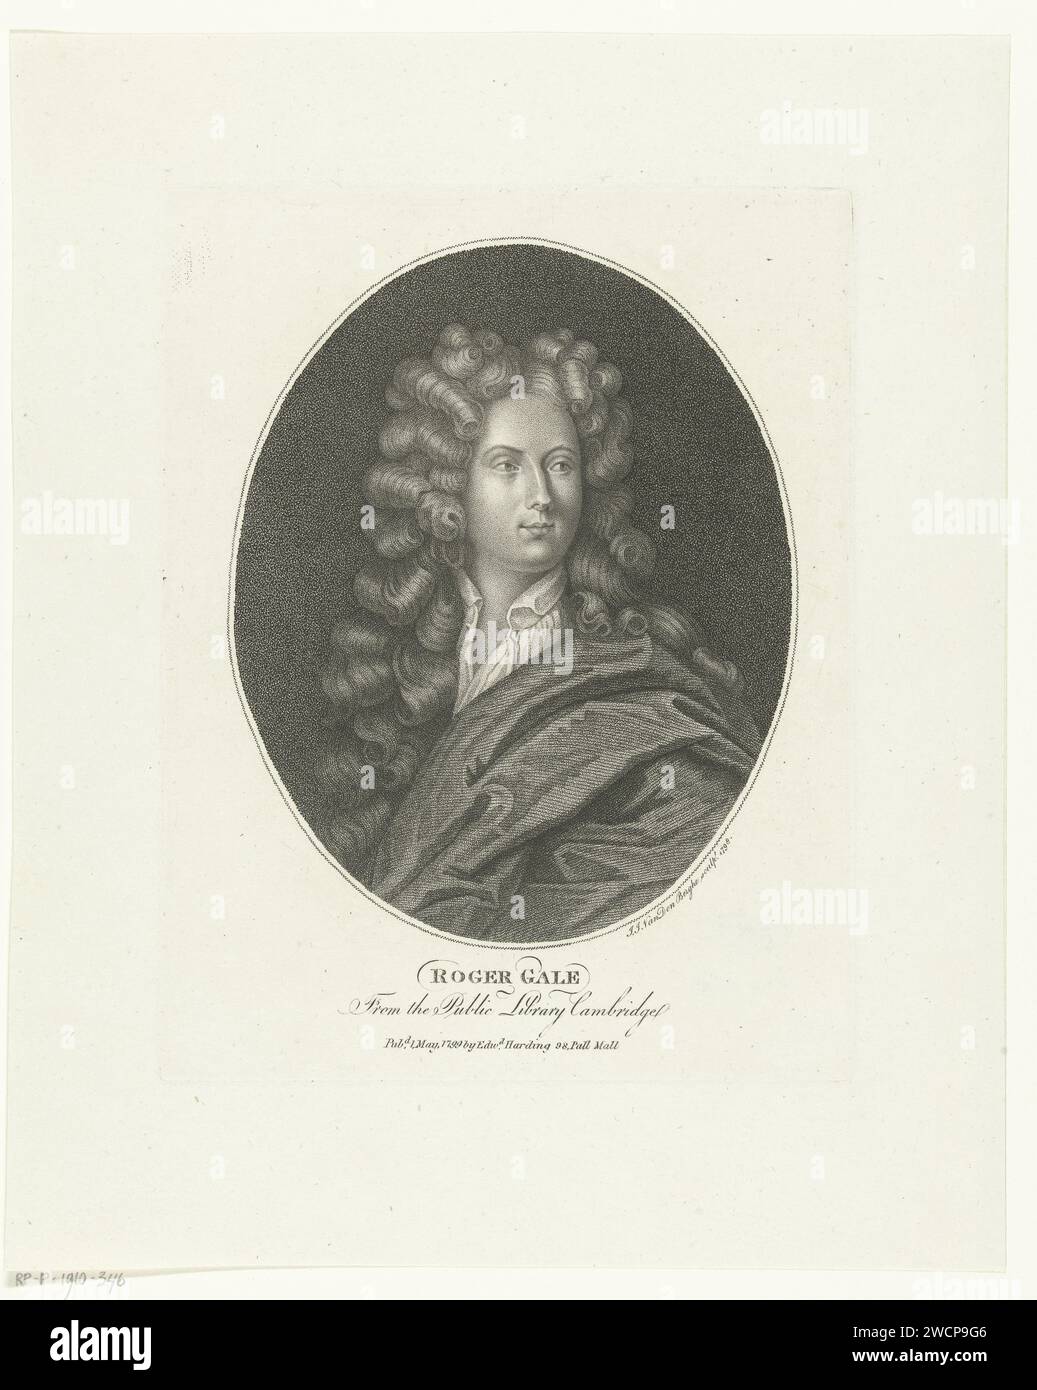 Portrait of Roger Gale, Ignatius Joseph van den Berghe, 1798 print   paper engraving Stock Photo